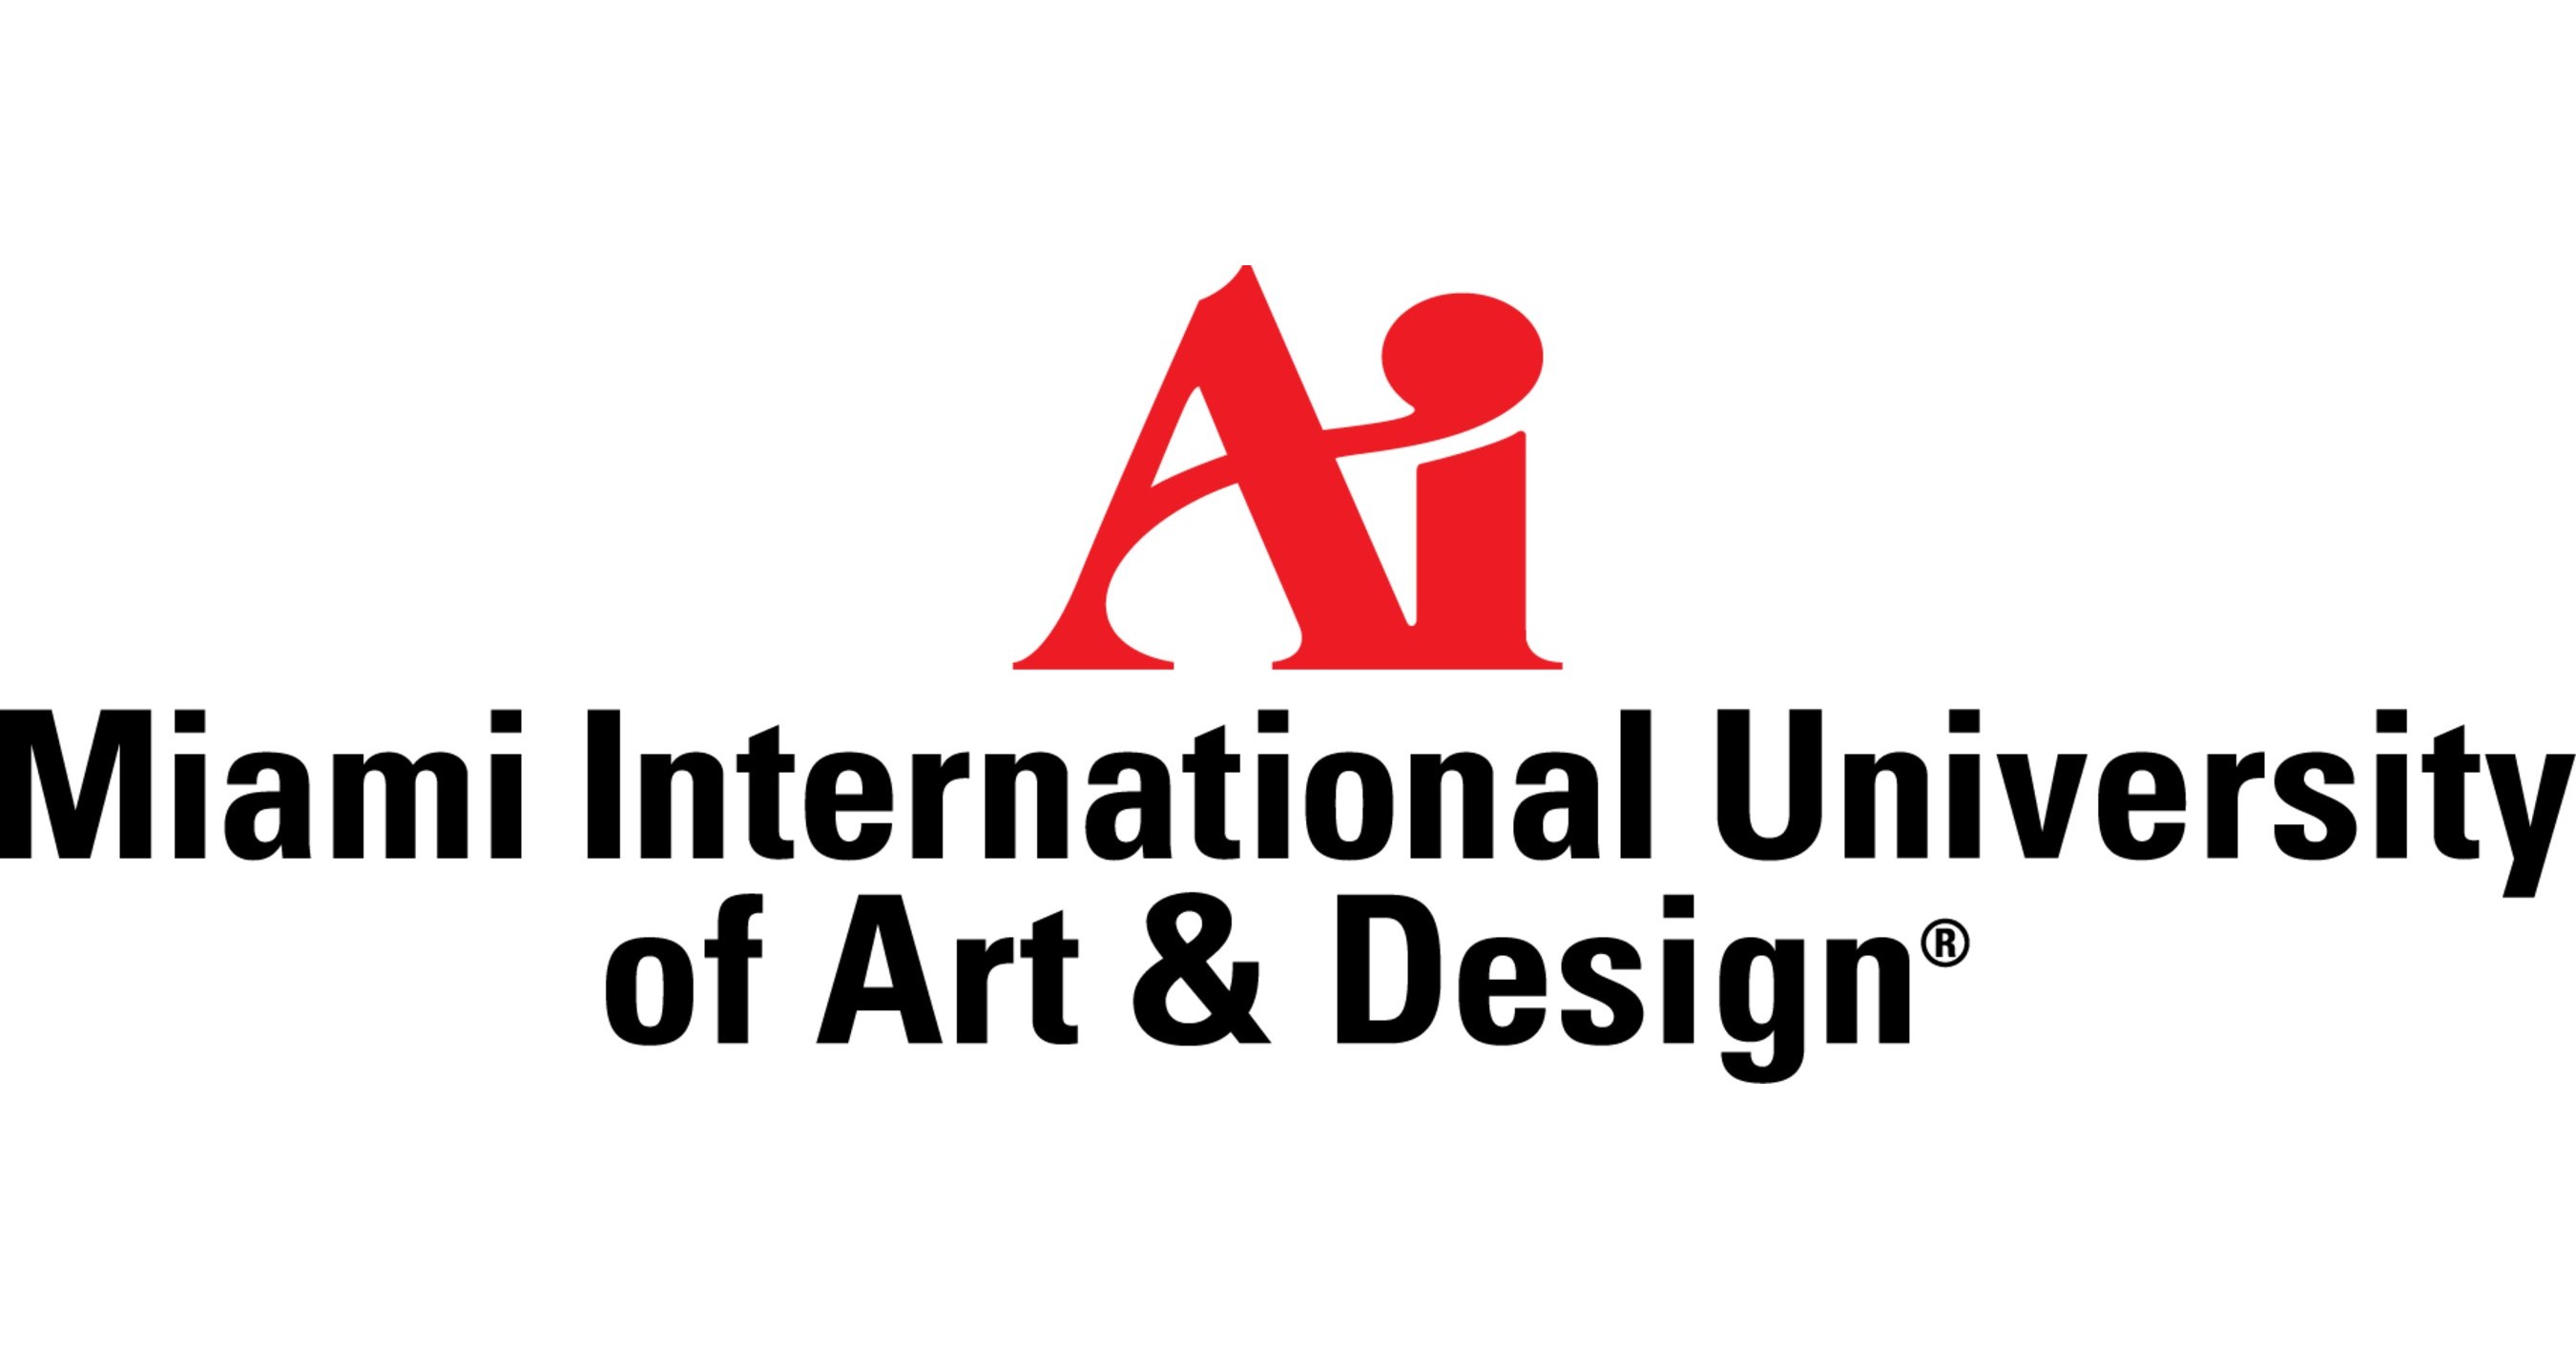  MIU Art & Design logo